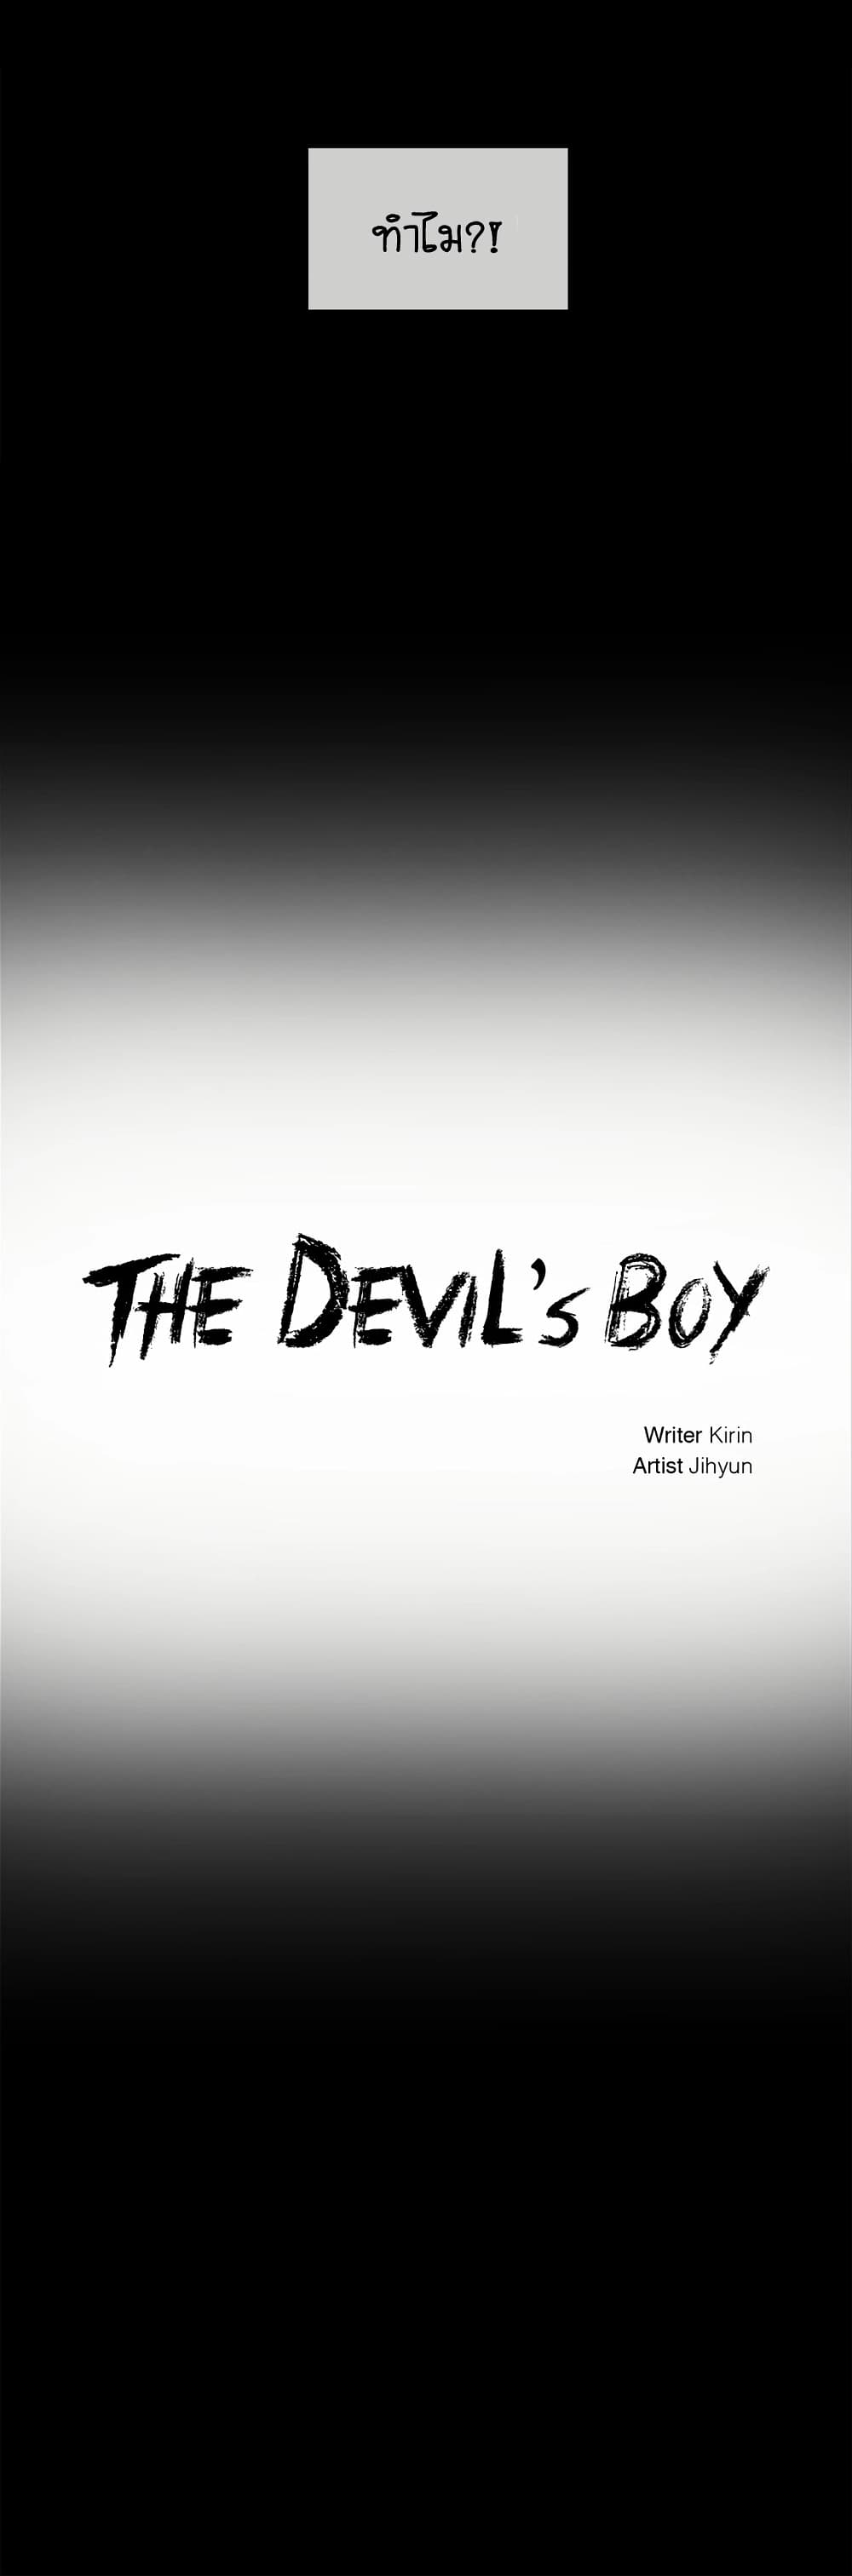 The Devil’s Boy11 (3)